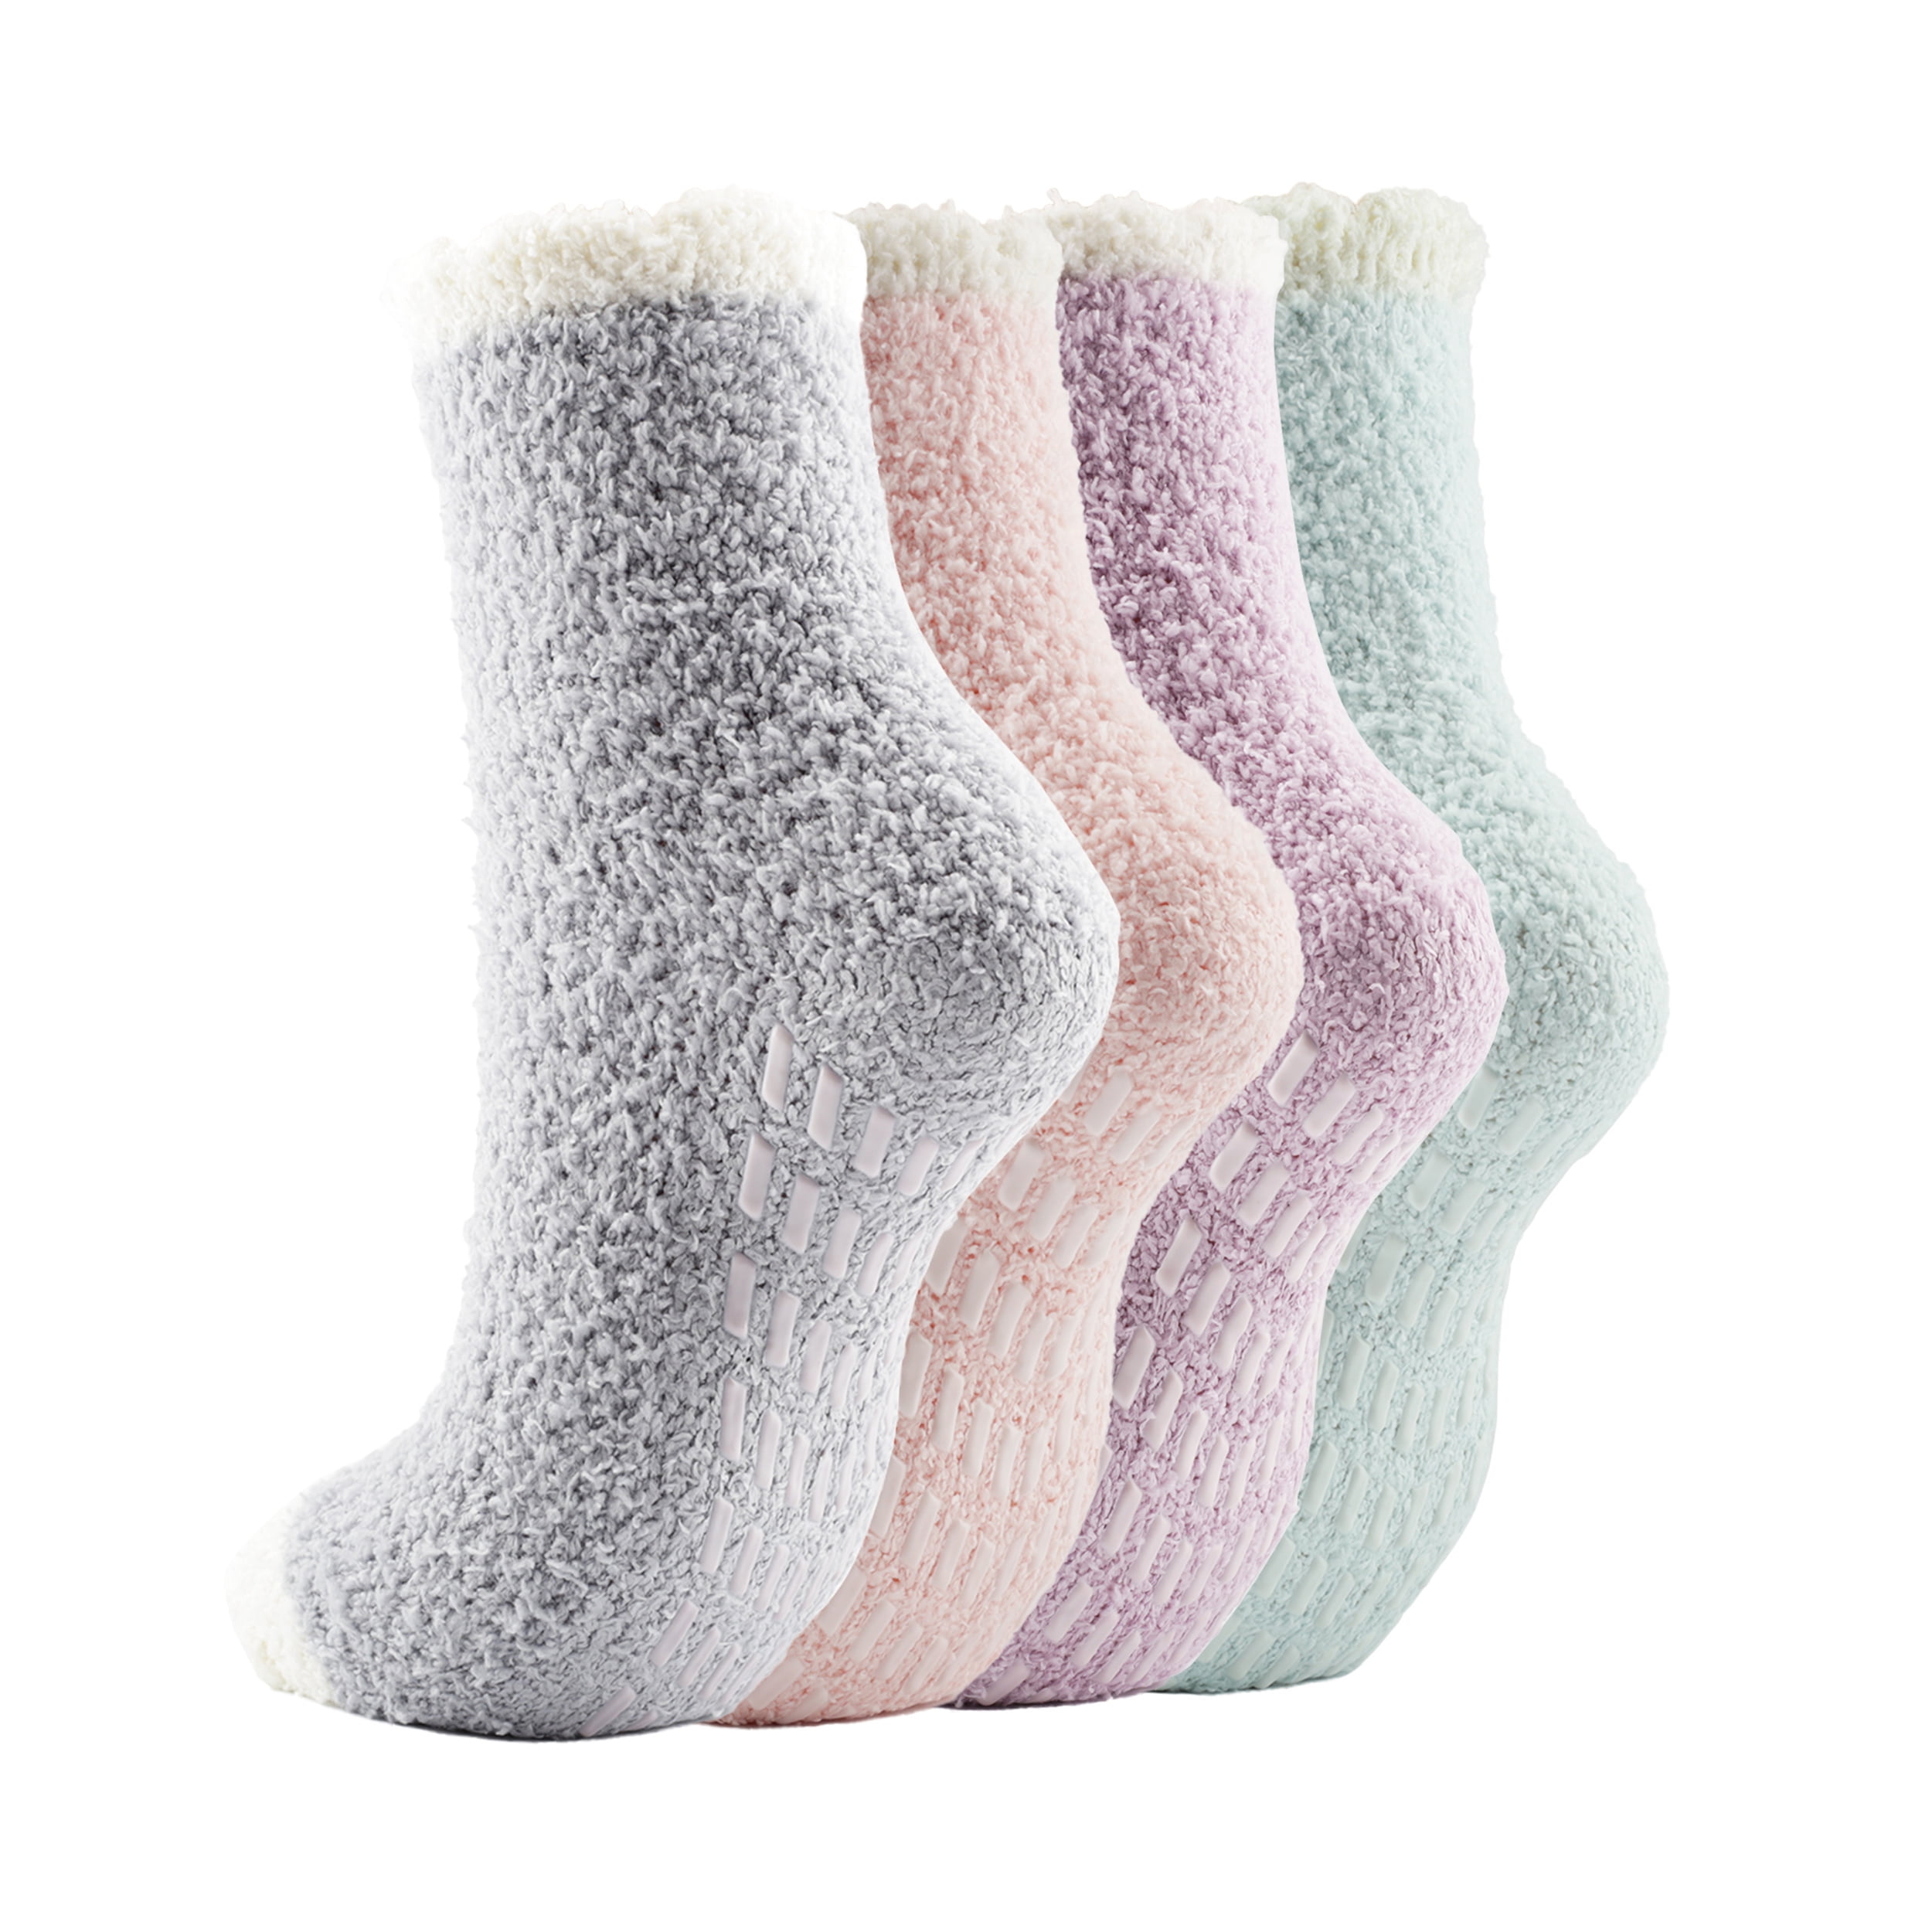 Breslatte Slipper Socks Women Fuzzy Warm Cozy Home Plush Microfiber  Sleeping House Micro Fleece greyballetpurplegreen Female Crew 